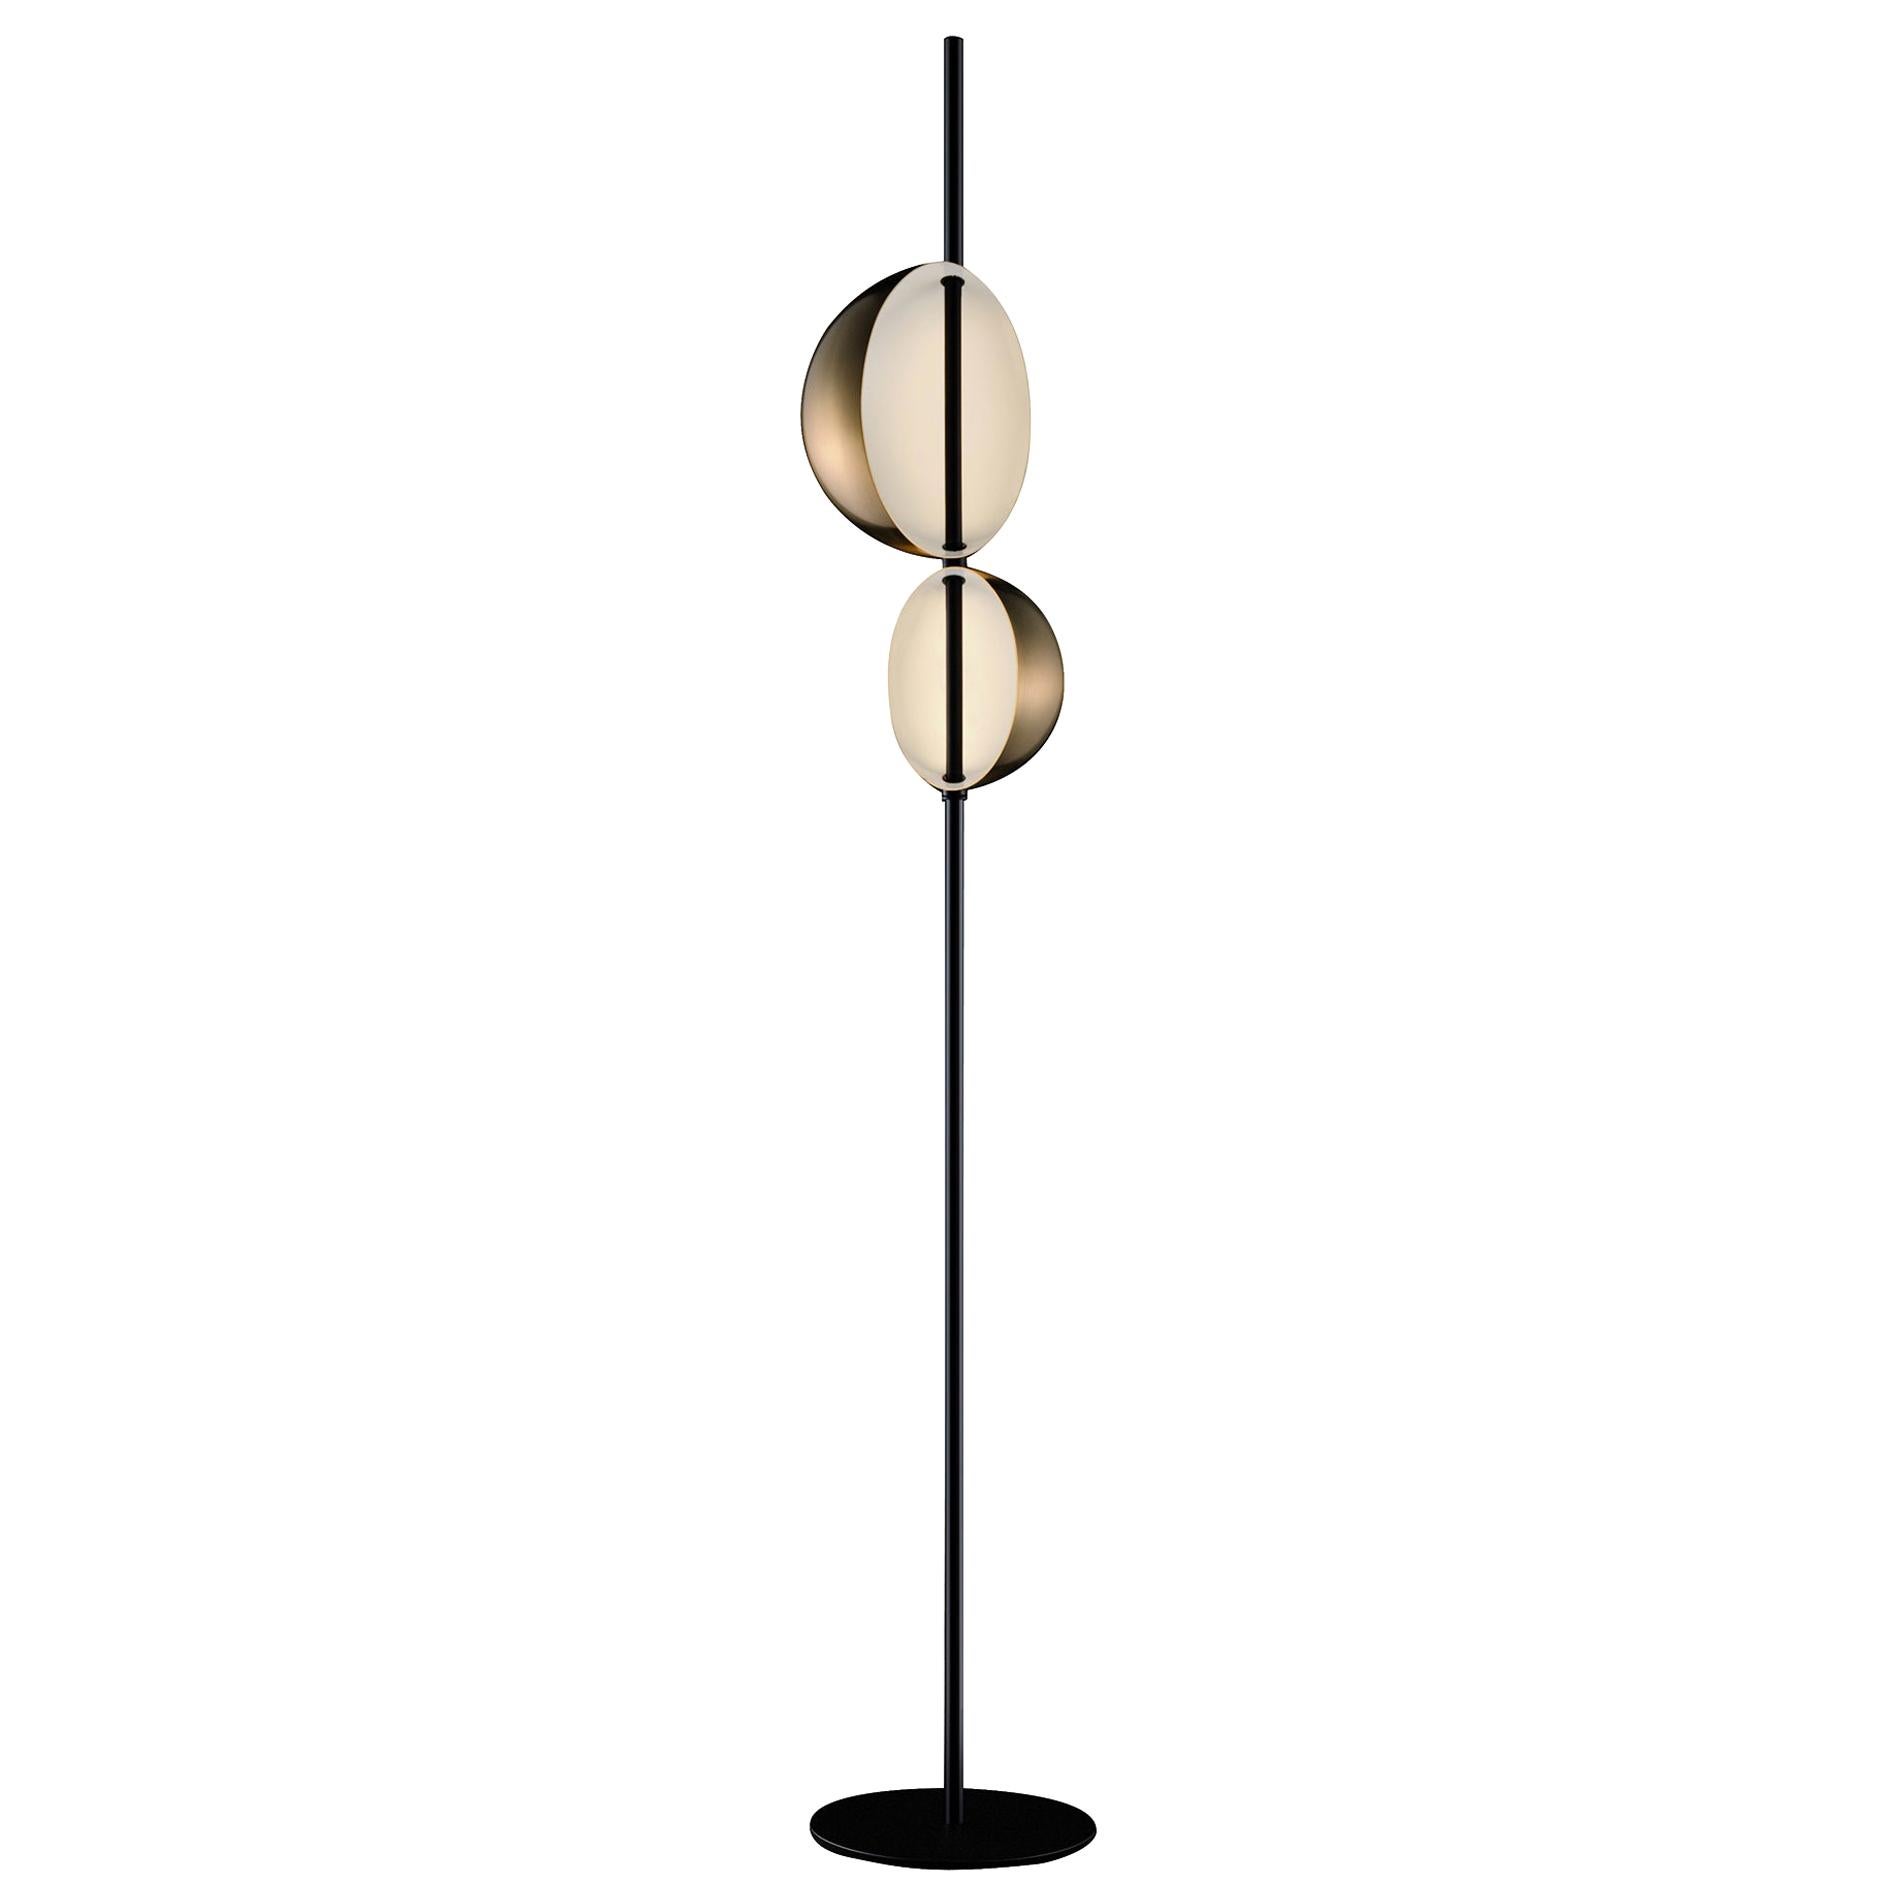 Victor Vaisilev Brass Floor Lamp 'Superluna' by Oluce For Sale